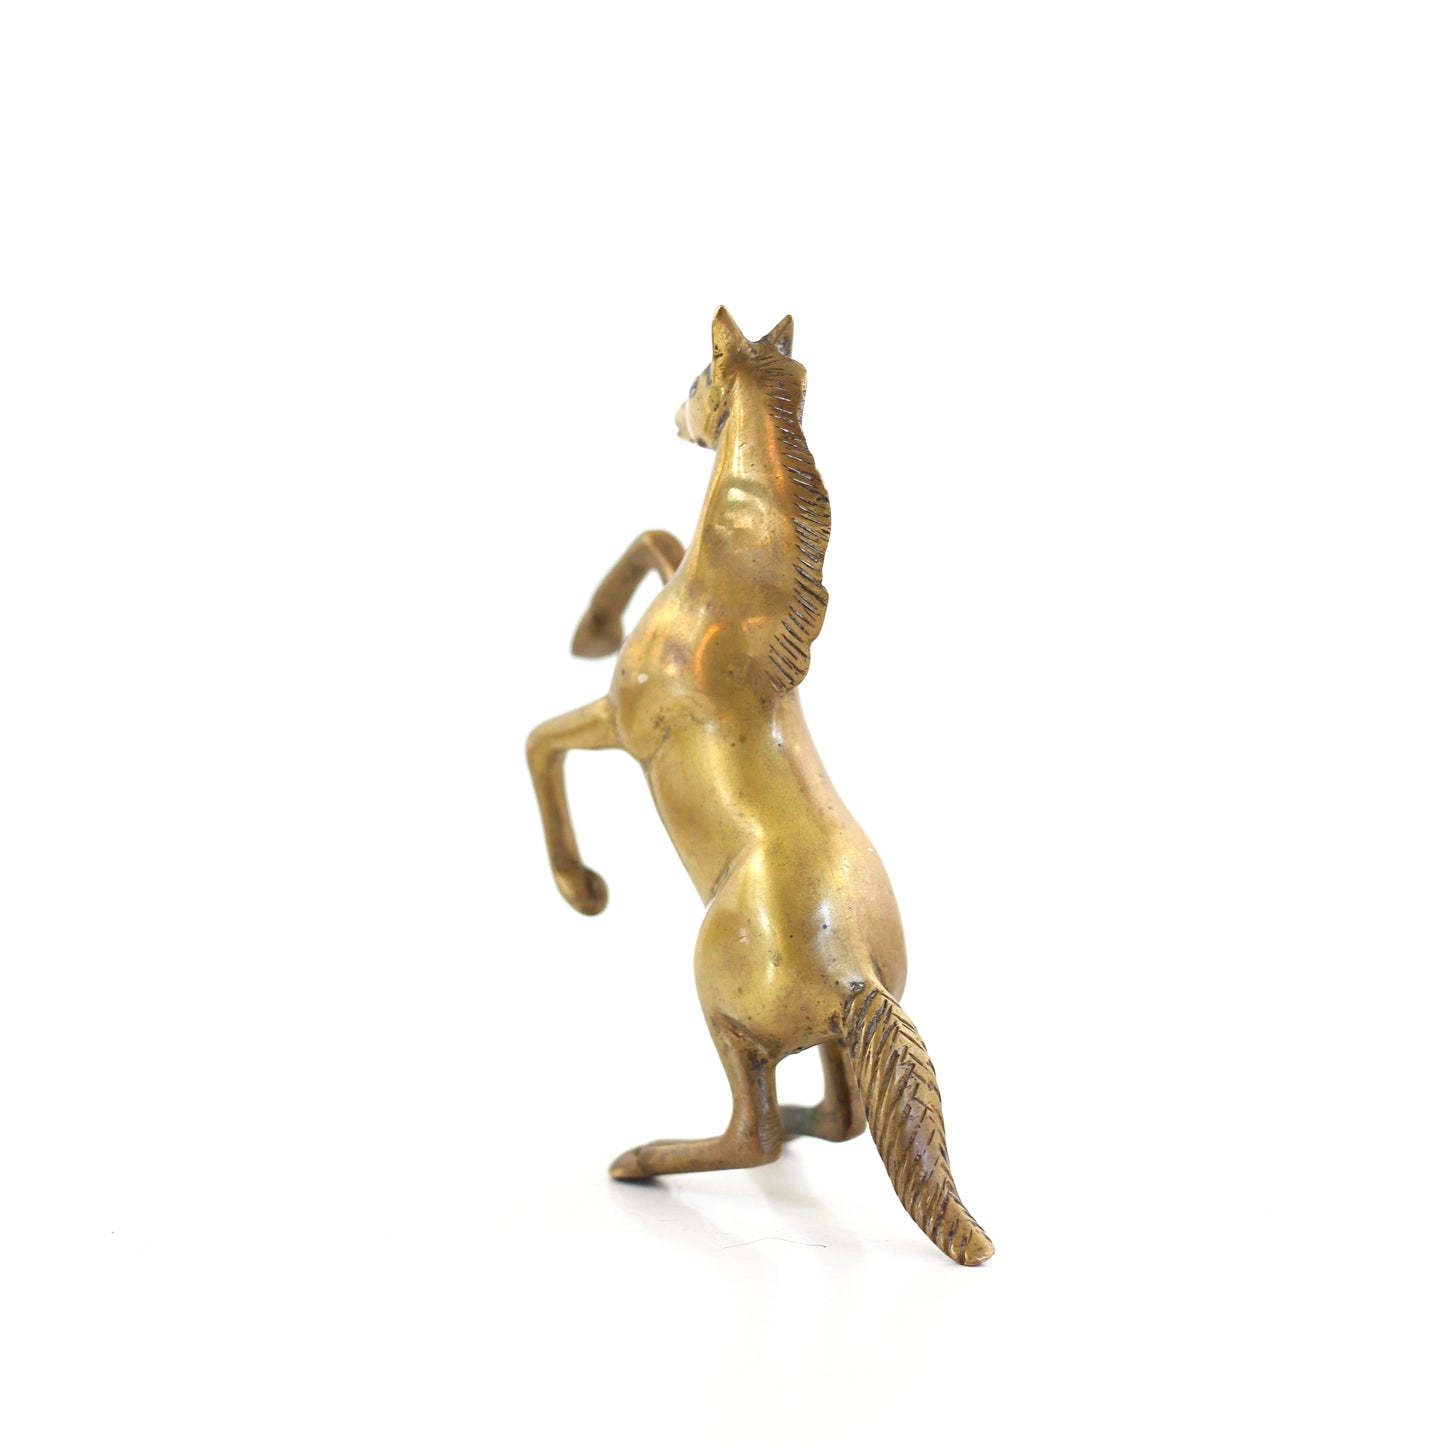 SOLD - Vintage Rearing Brass Horse Figurine